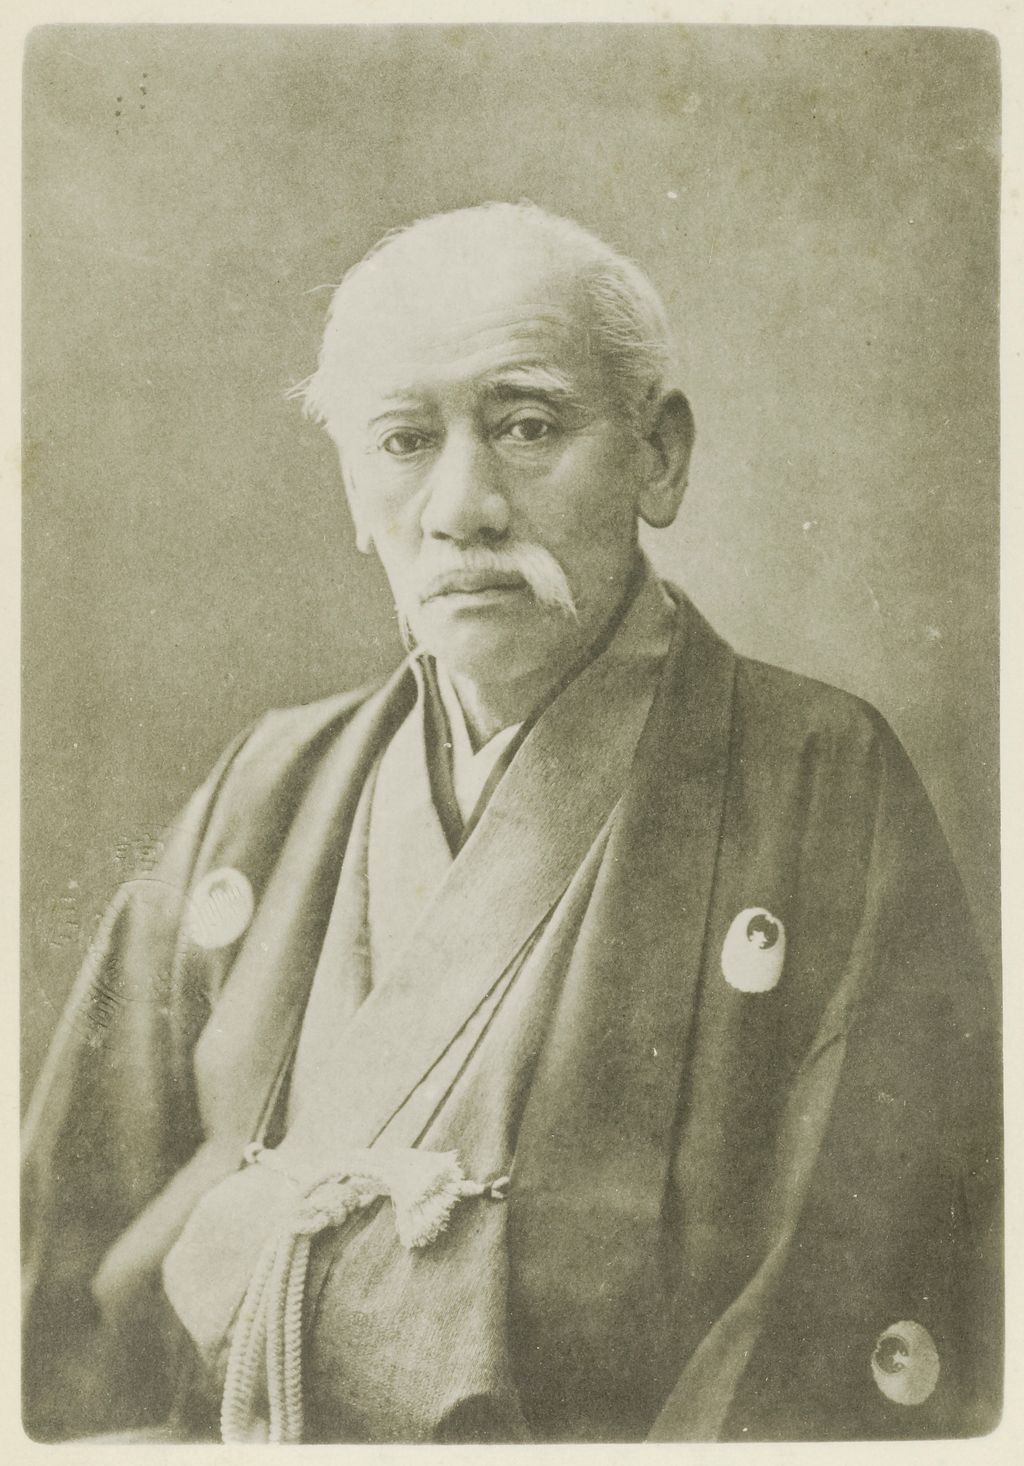 Mr Shōzō Kawasaki, Japanese industrialist and shipbuilder